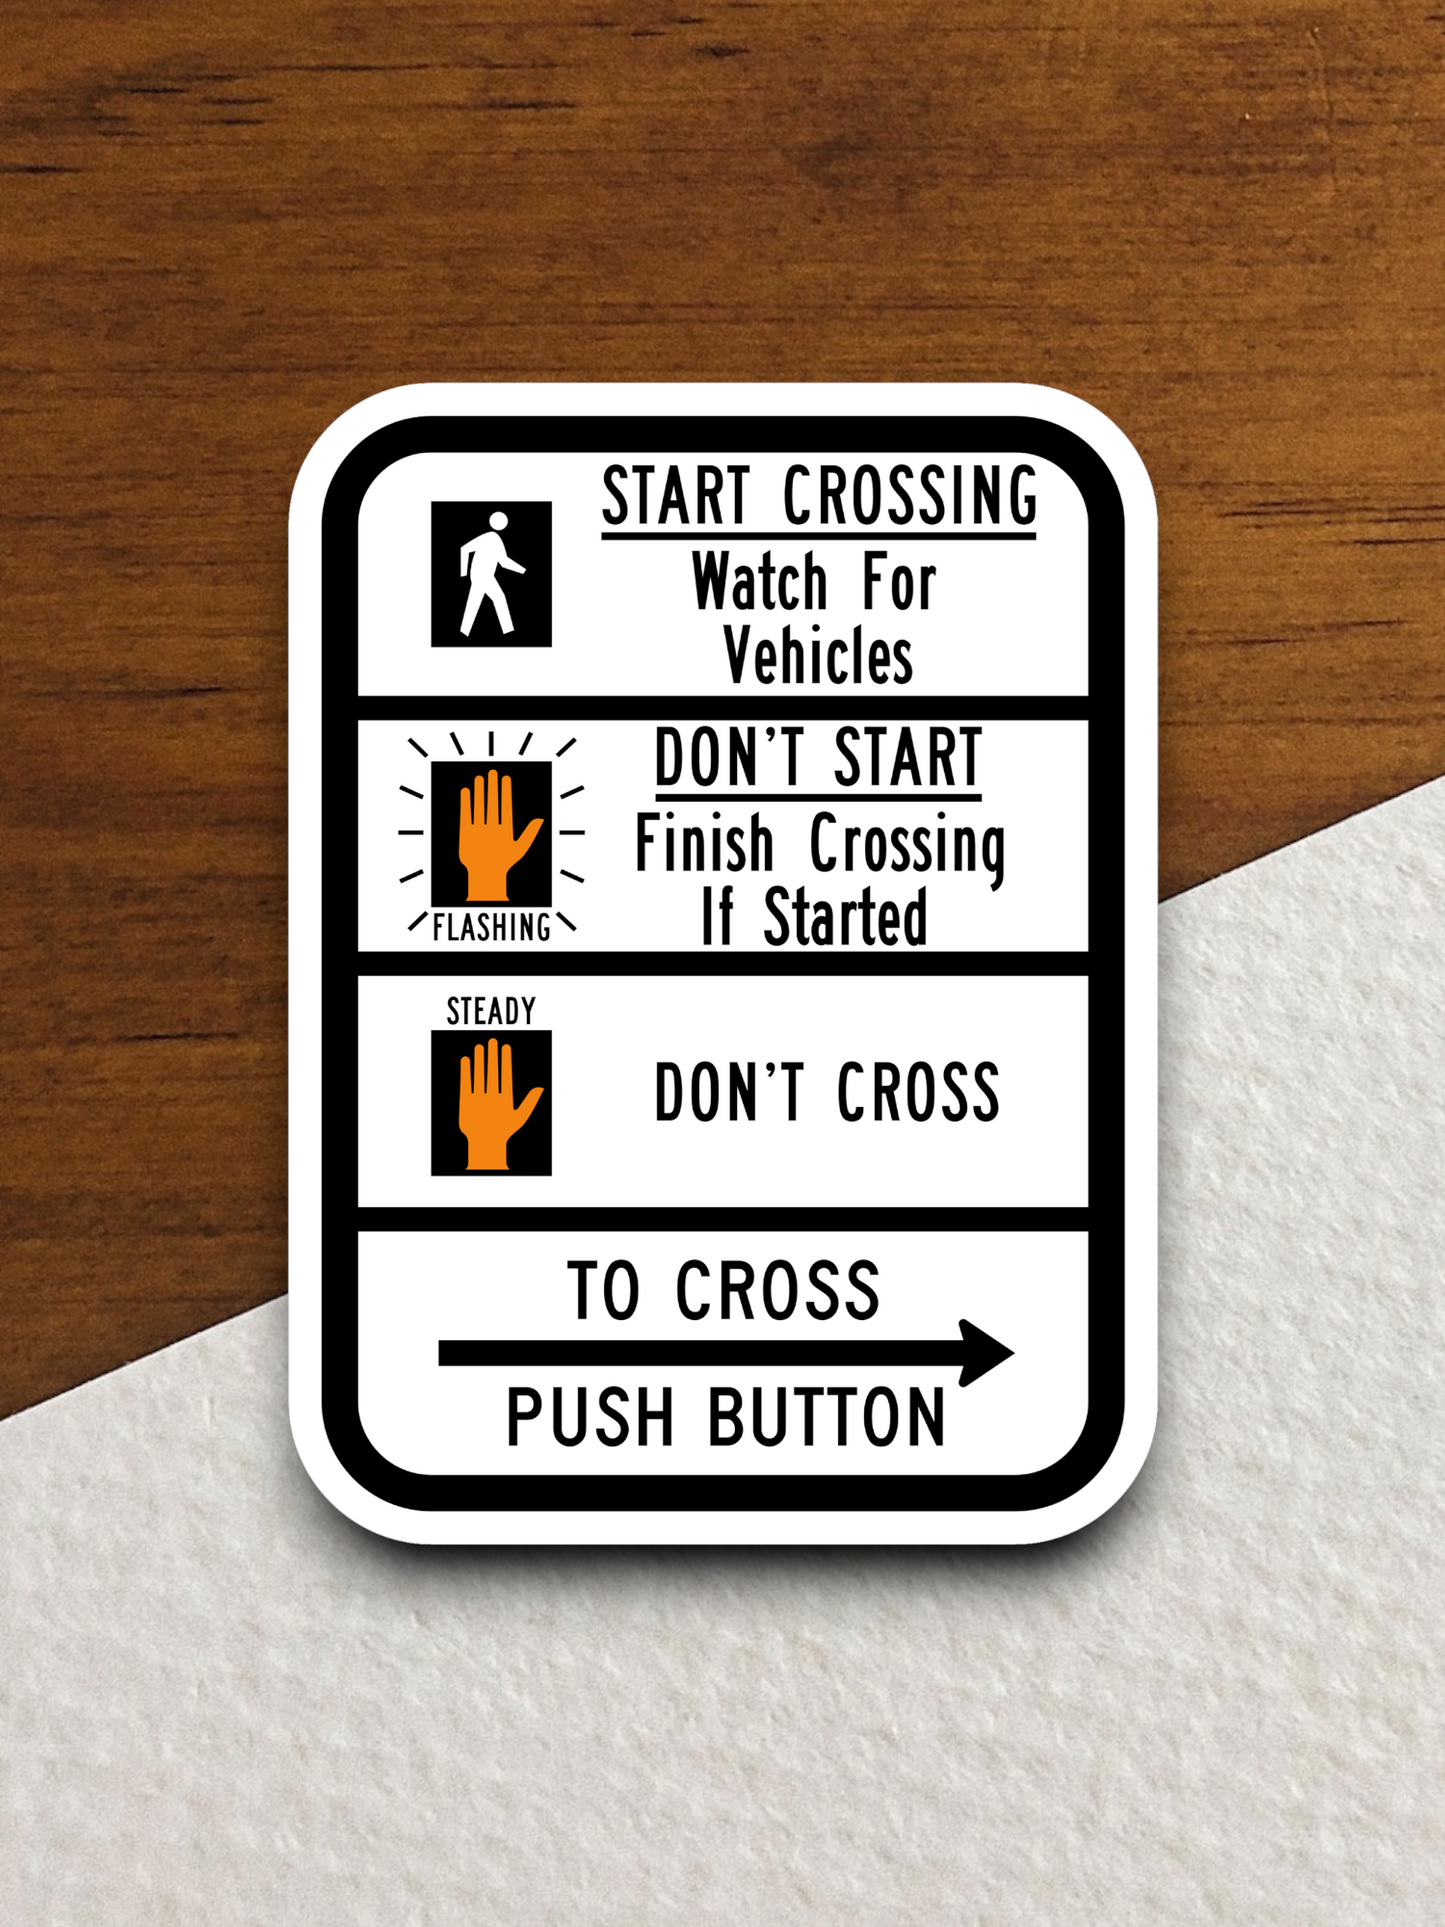 Crosswalk signal instructions United States Road Sign Sticker